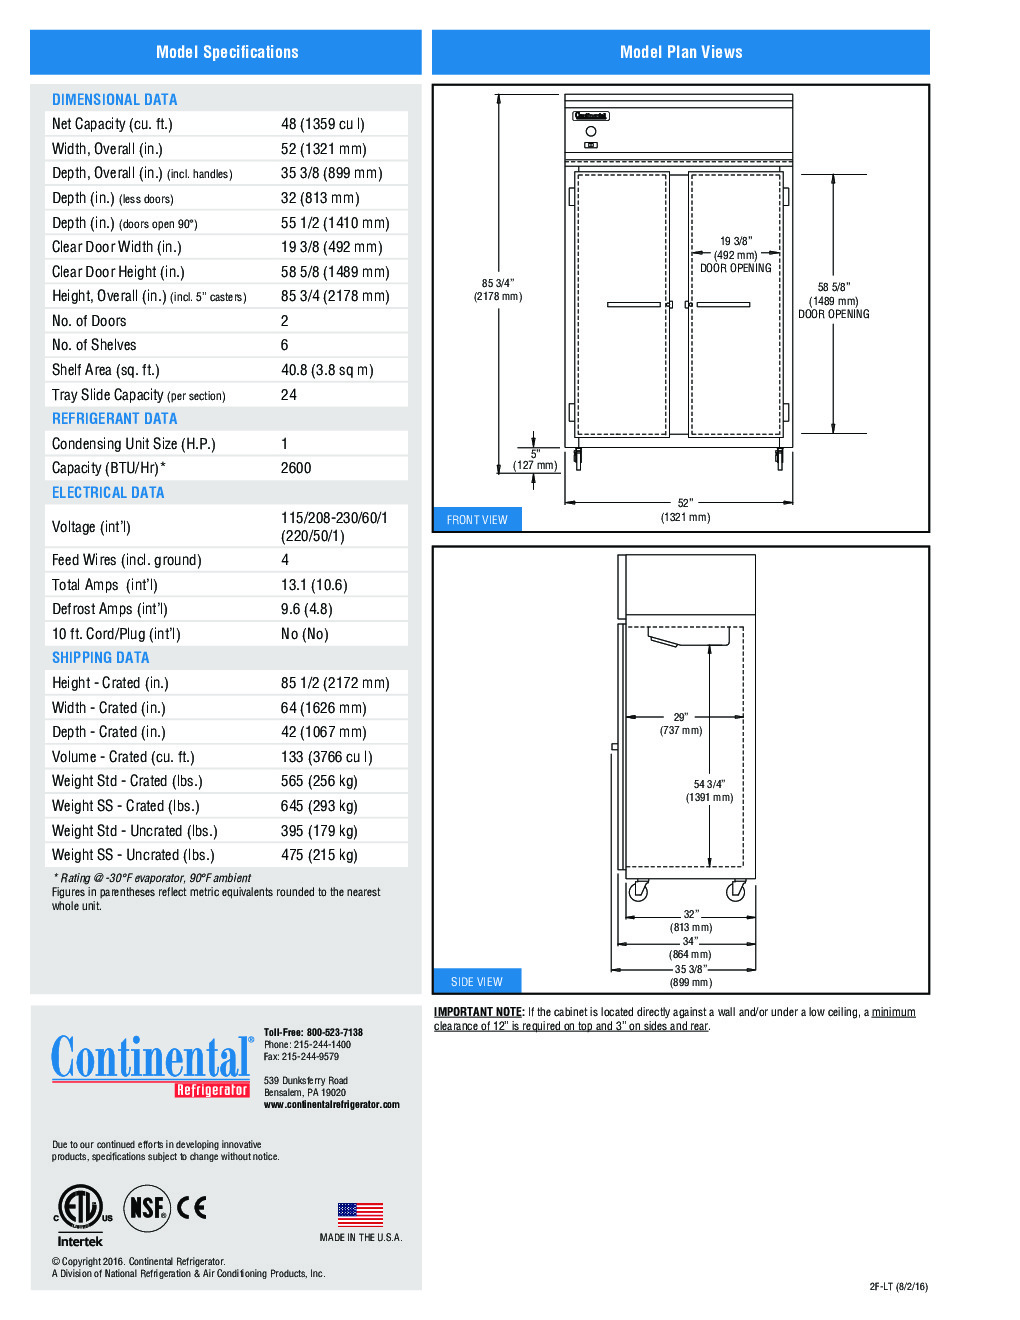 Continental Refrigerator 2F-LT Reach-In Low Temperature Freezer